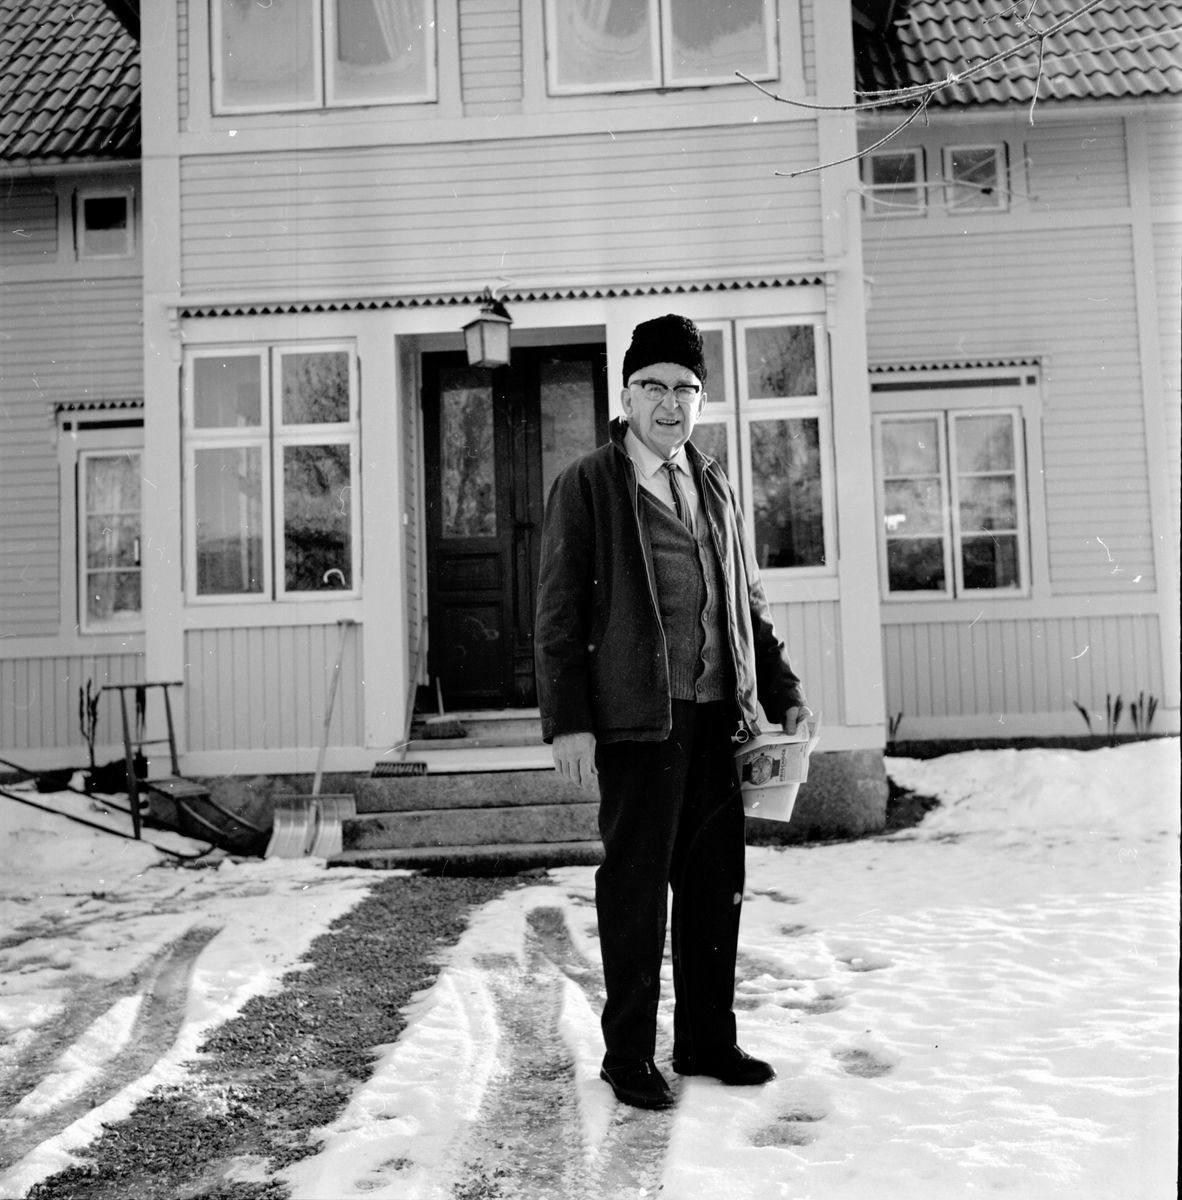 Undersvik,
Olaus Lind, Predikant, Kommunalman,
Dec 1970